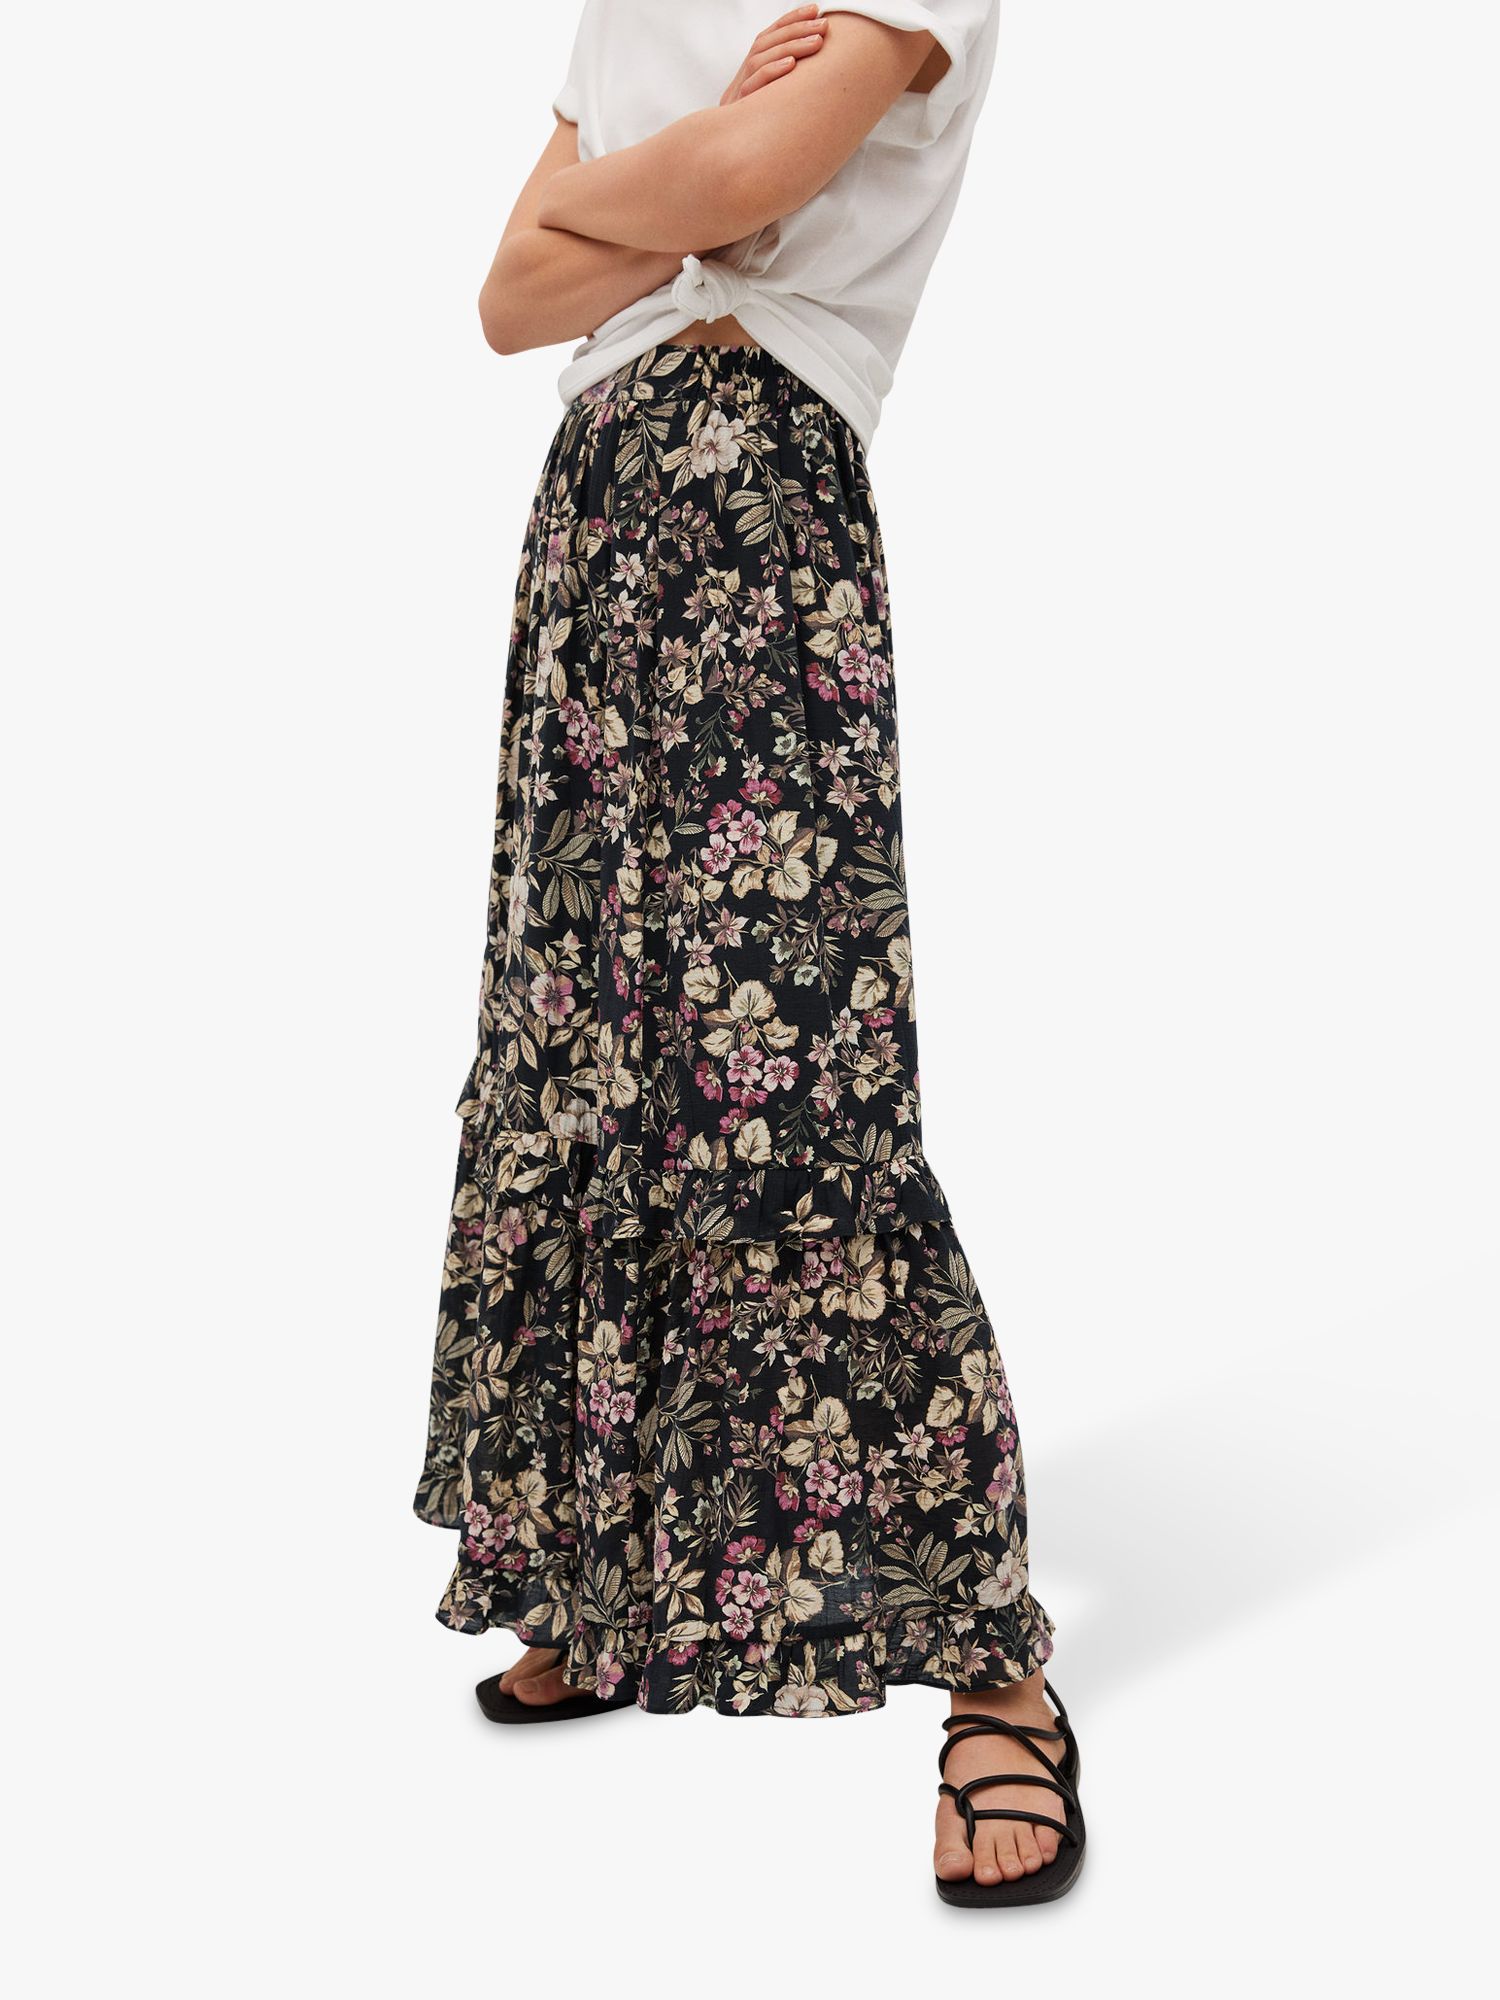 Mango Floral Maxi Skirt, Black/Multi